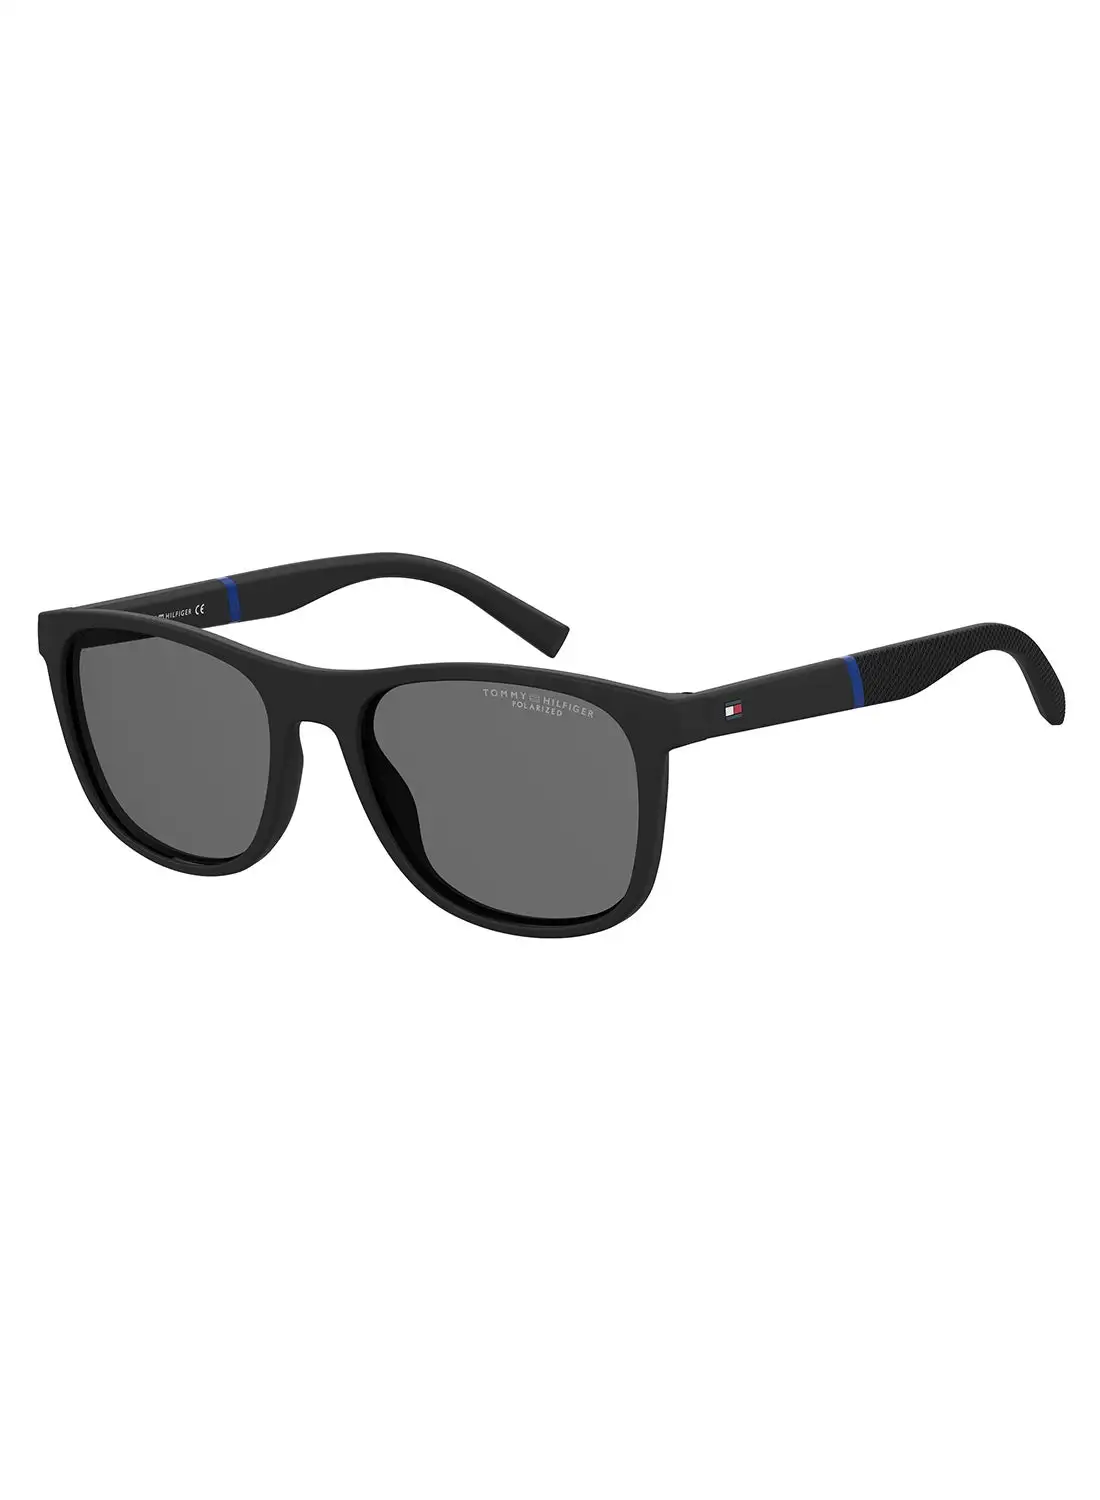 TOMMY HILFIGER Men's Polarized Rectangular Sunglasses - Th 2042/S Black Millimeter - Lens Size: 54 Mm